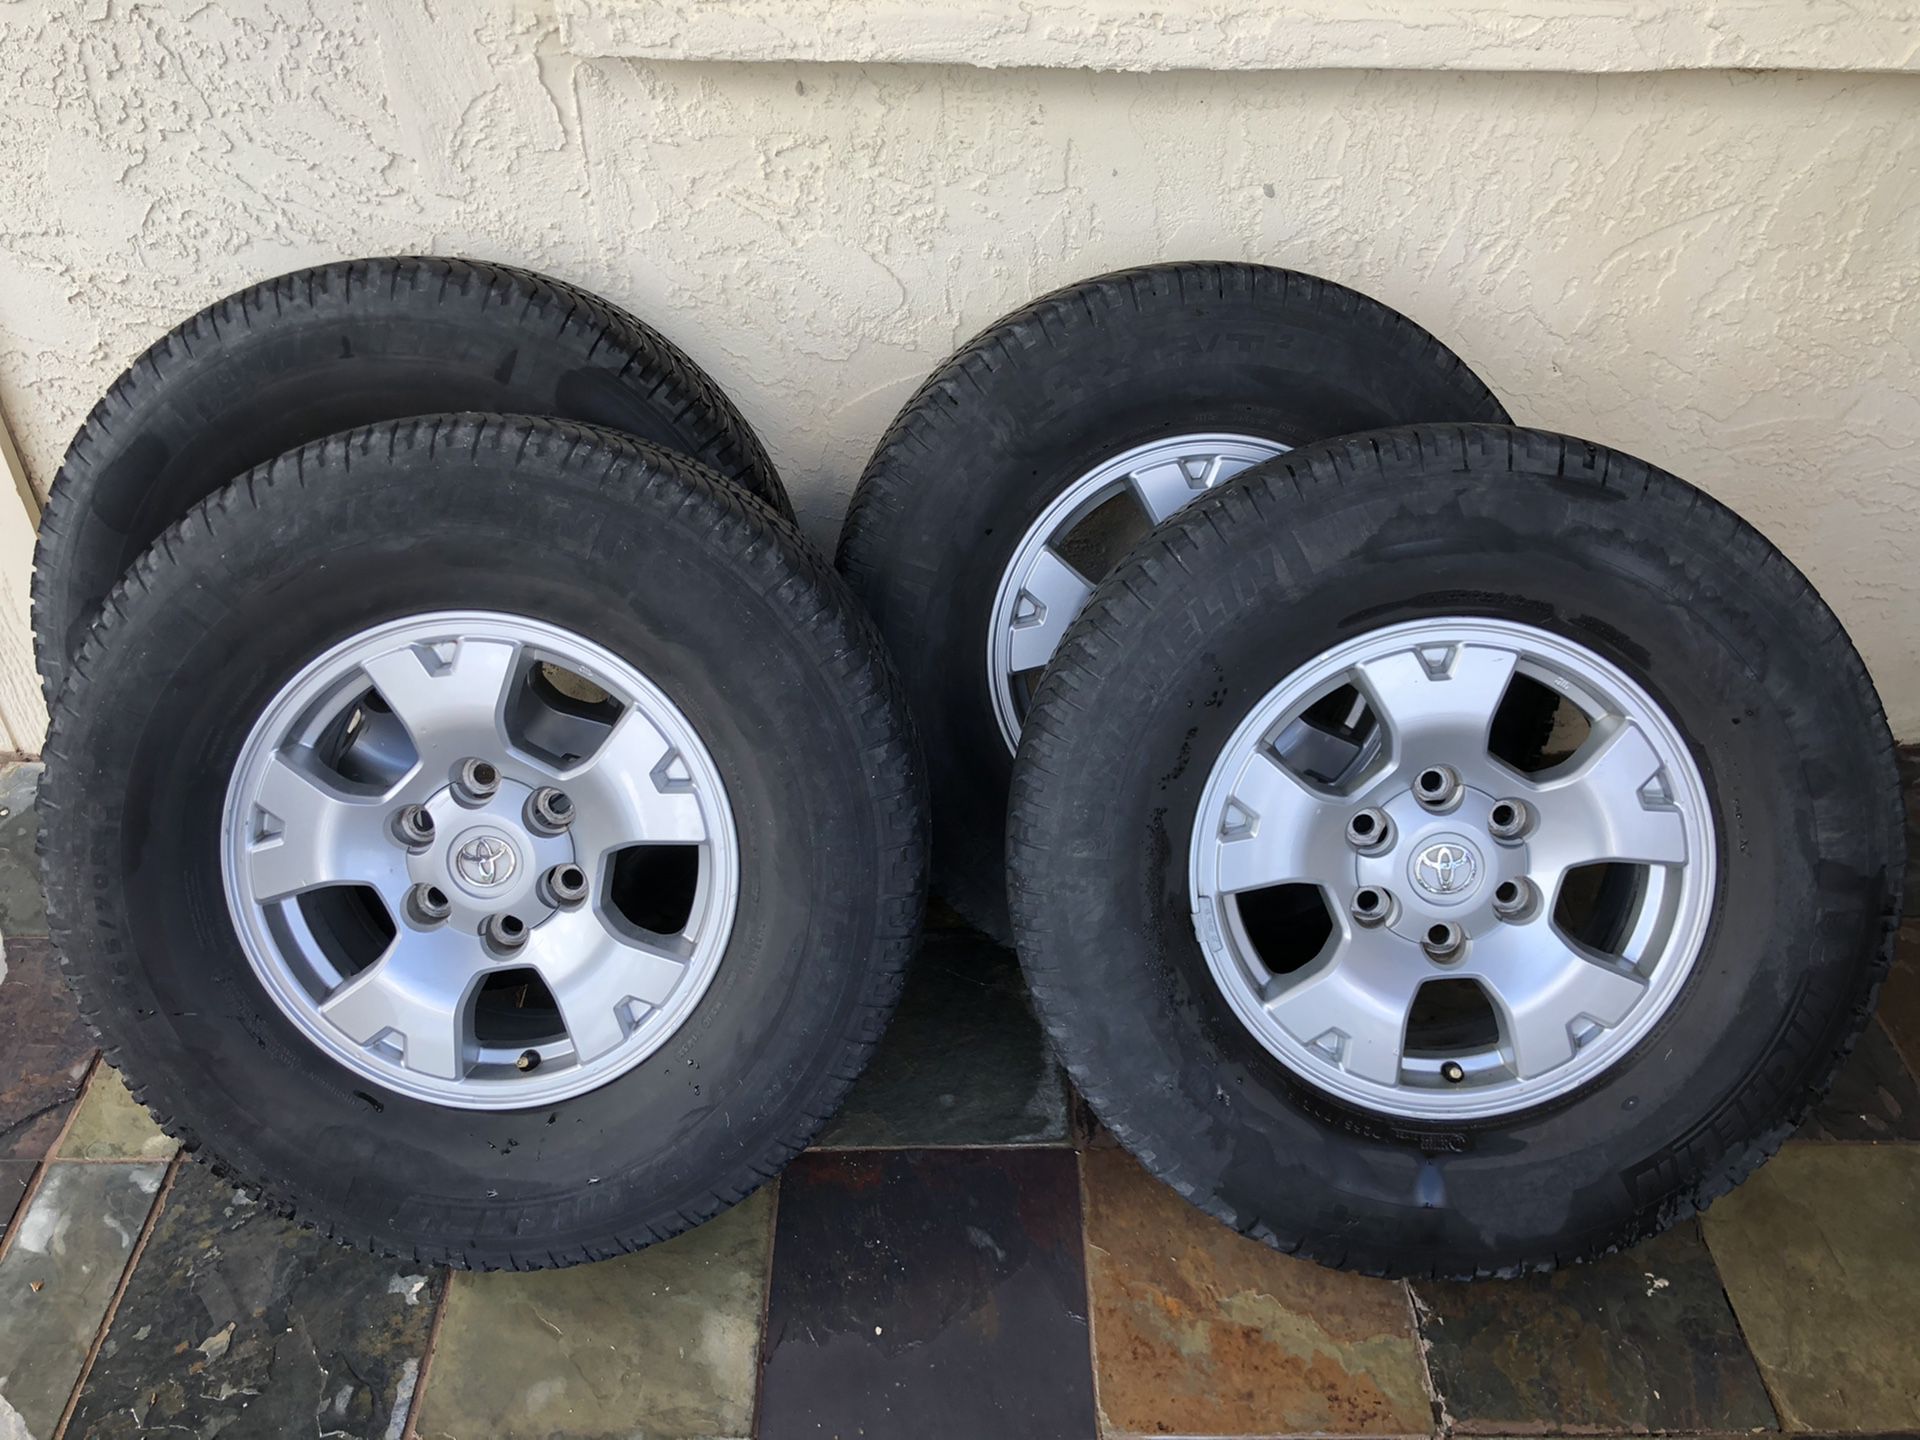 Michelin LTX A/T P265/70R16 tires on Toyota 6 lug 16x7” Rims